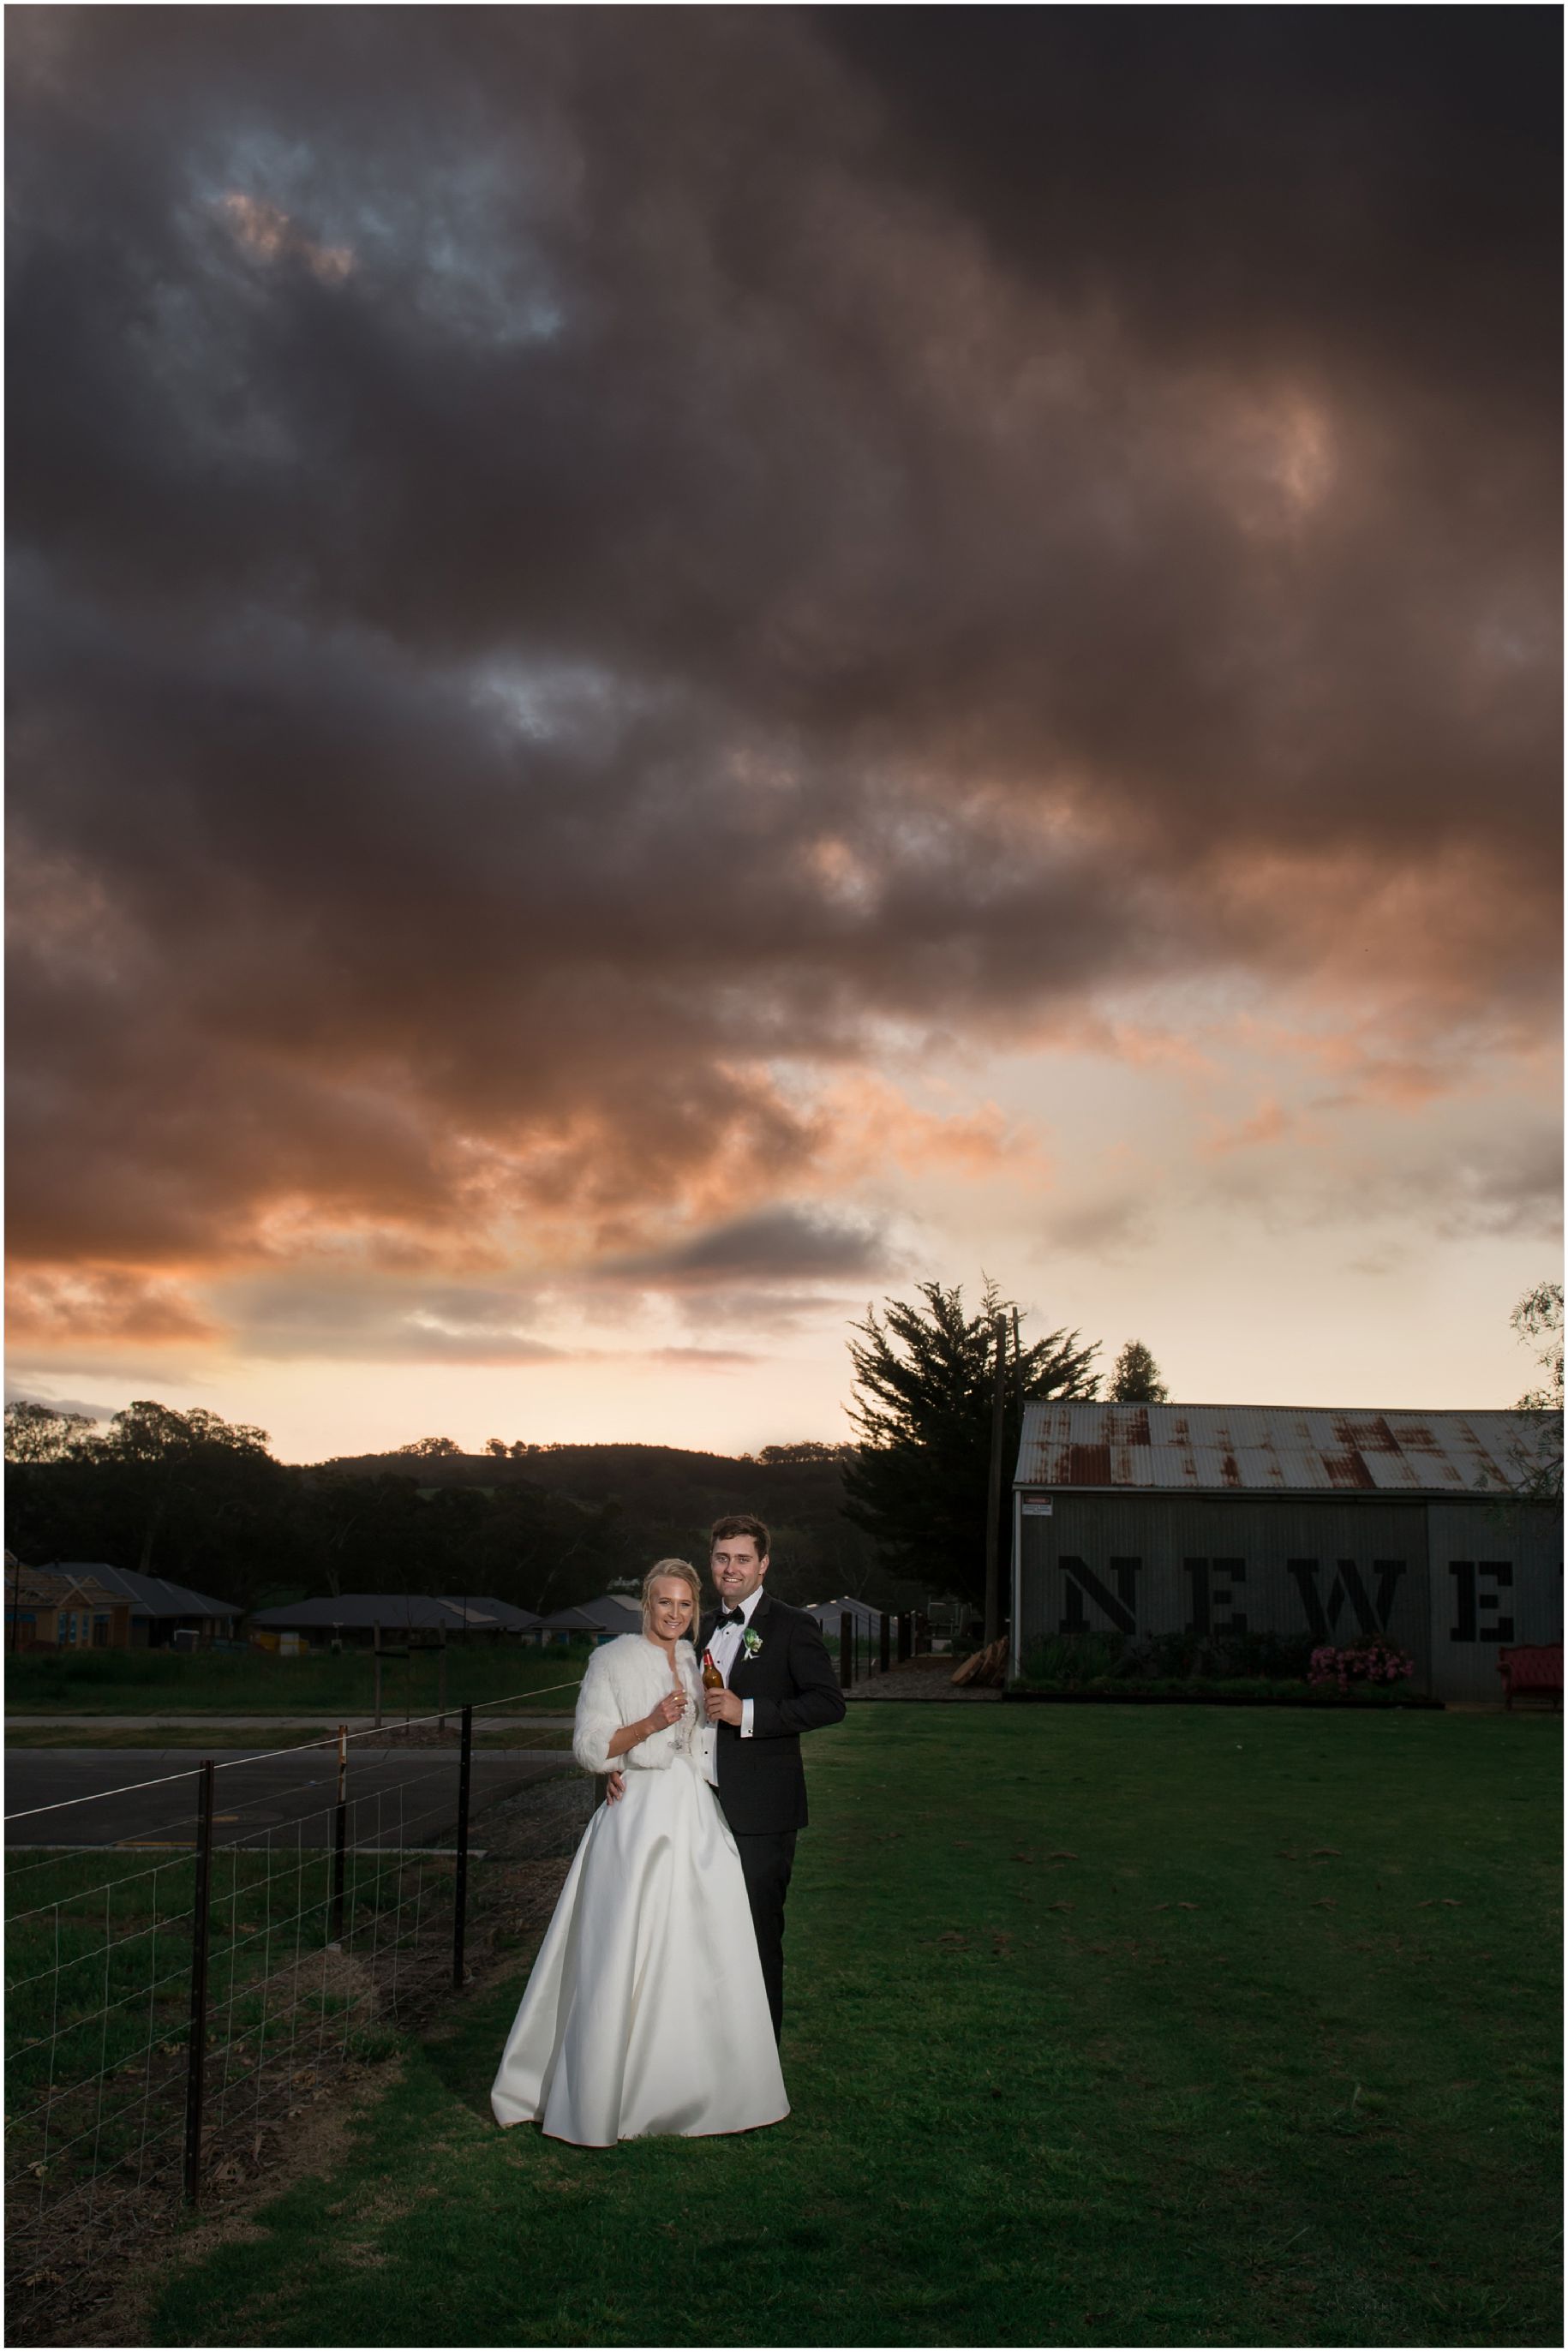 Newneham mount barker wedding helicopter bride groom